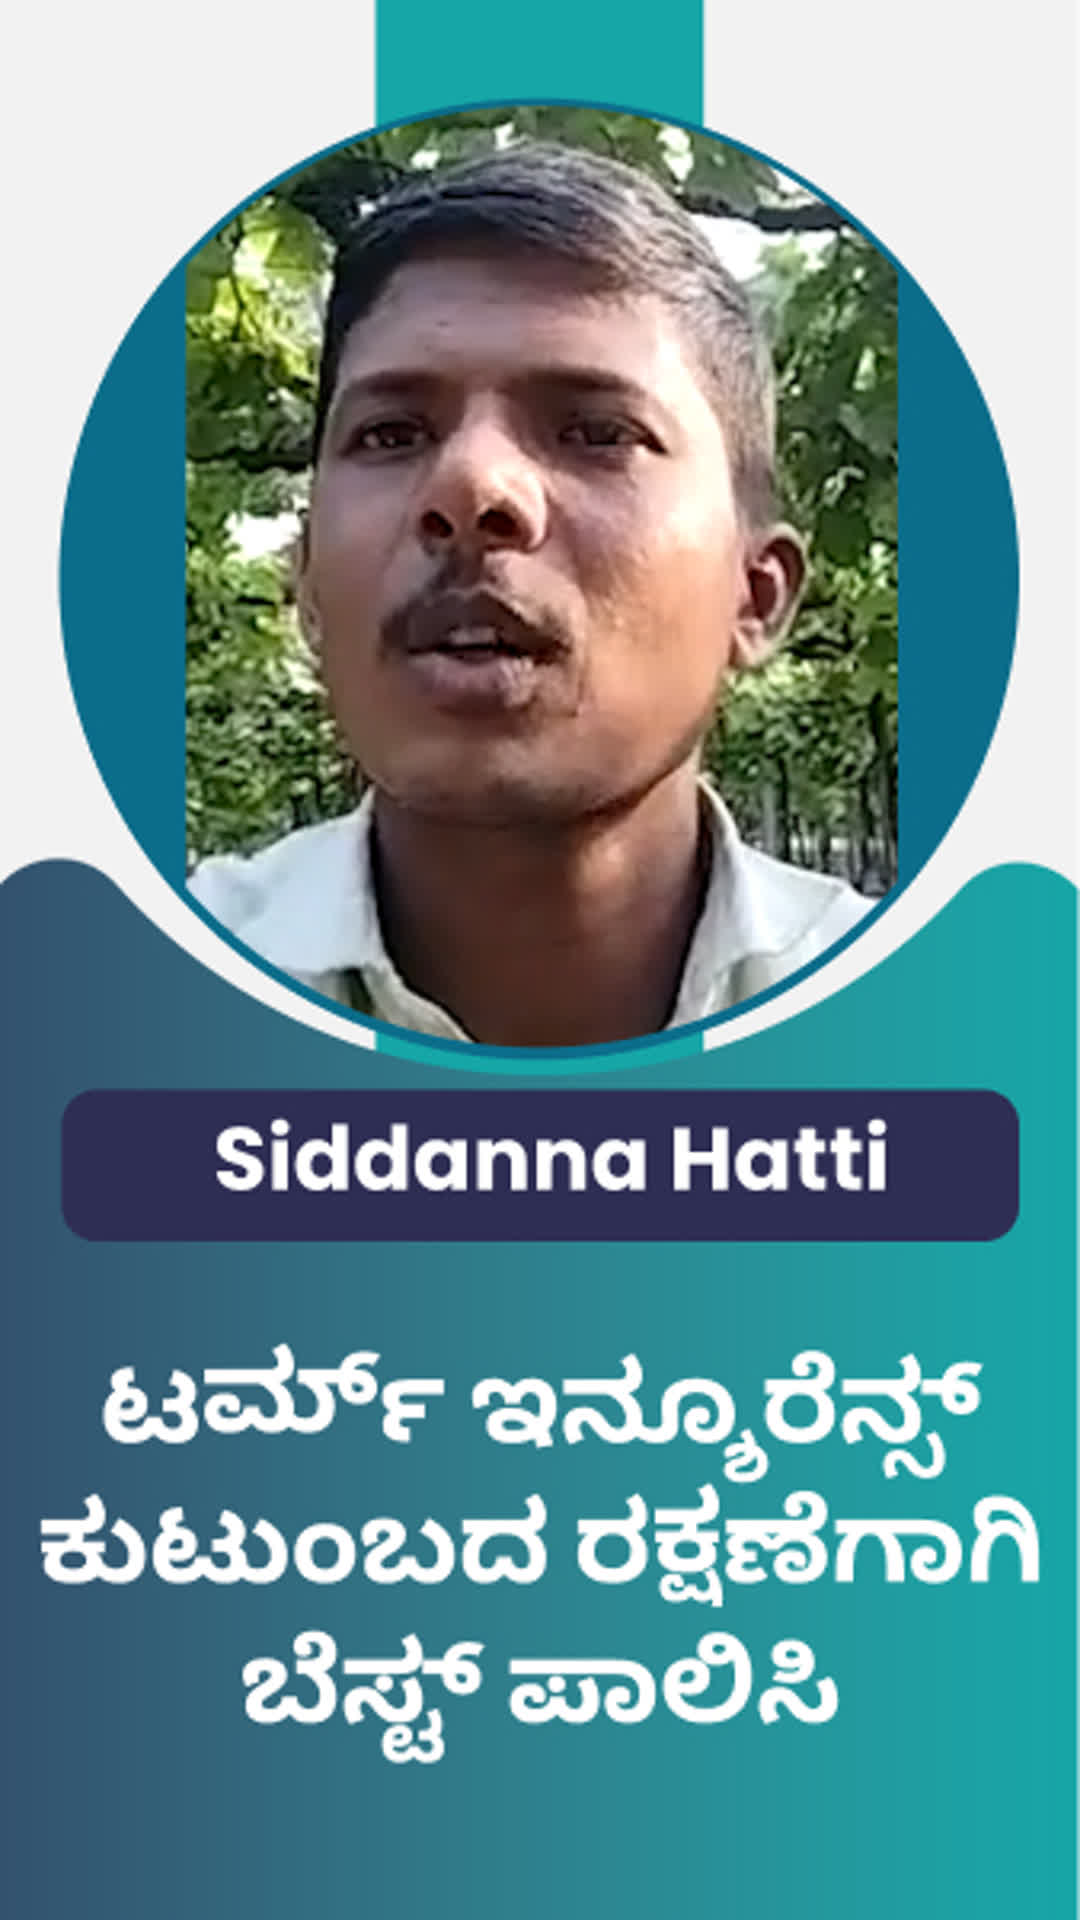 SIDDANNA DHONDAPPA HATTI's Honest Review of ffreedom app - Sangli ,Karnataka